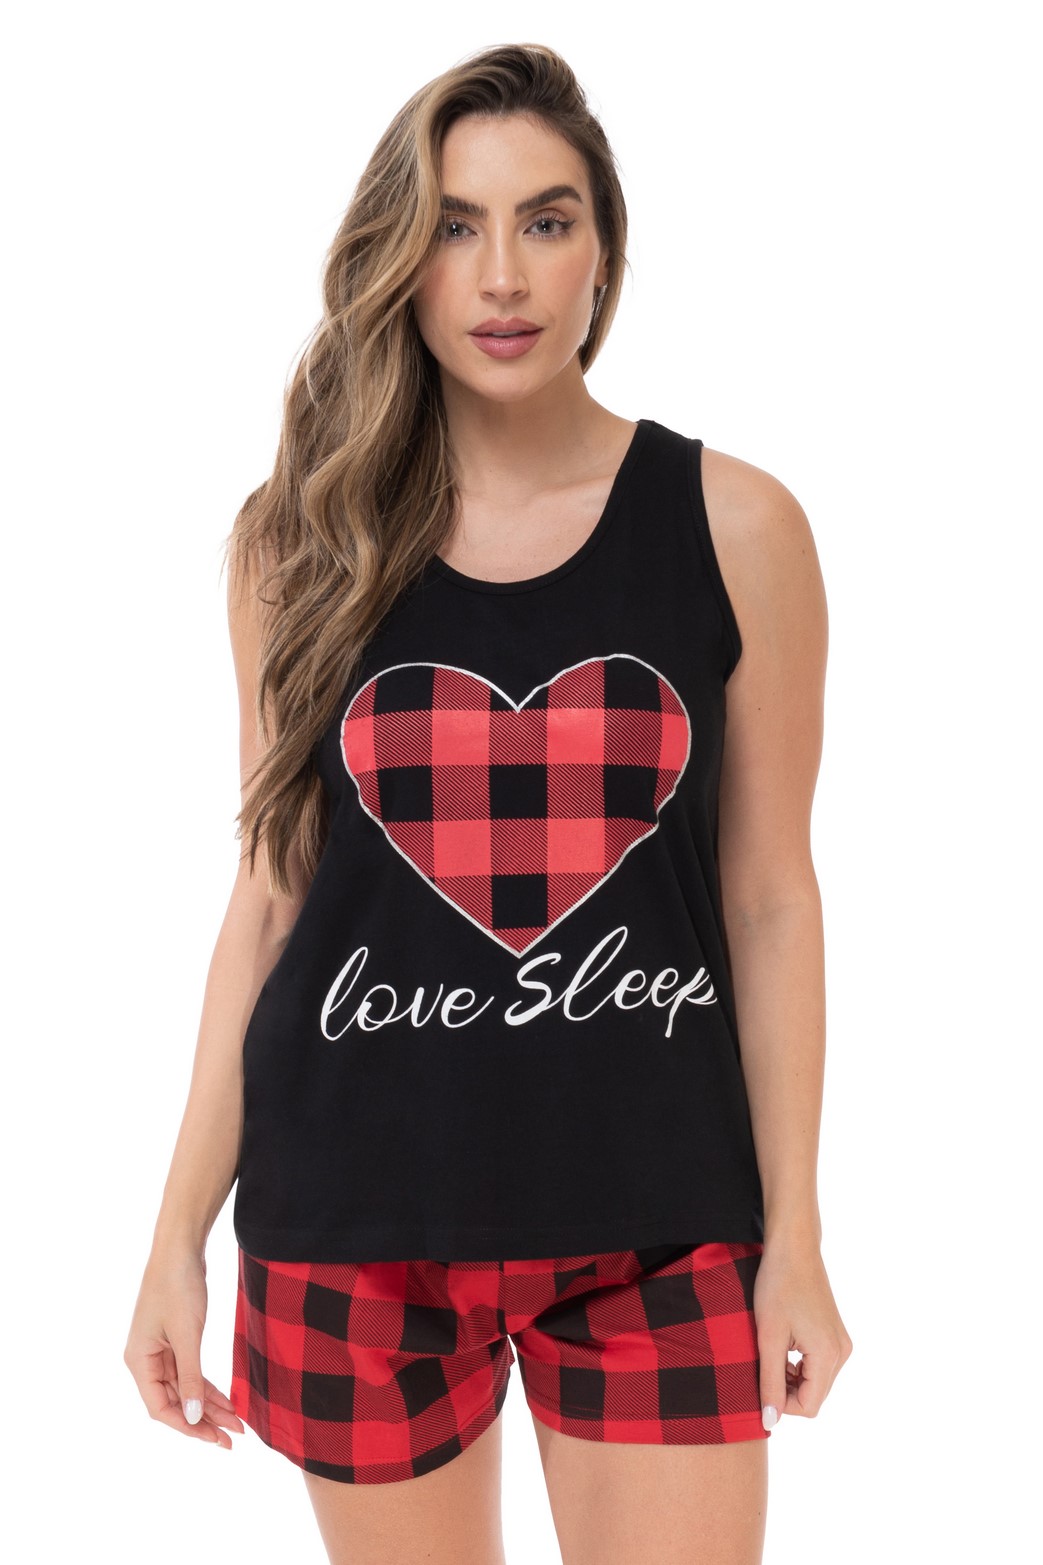 Just Love 100% Cotton Women Sleepwear Pajama Sets (Black - Love Sleep Buffalo Plaid, Small) - image 1 of 3